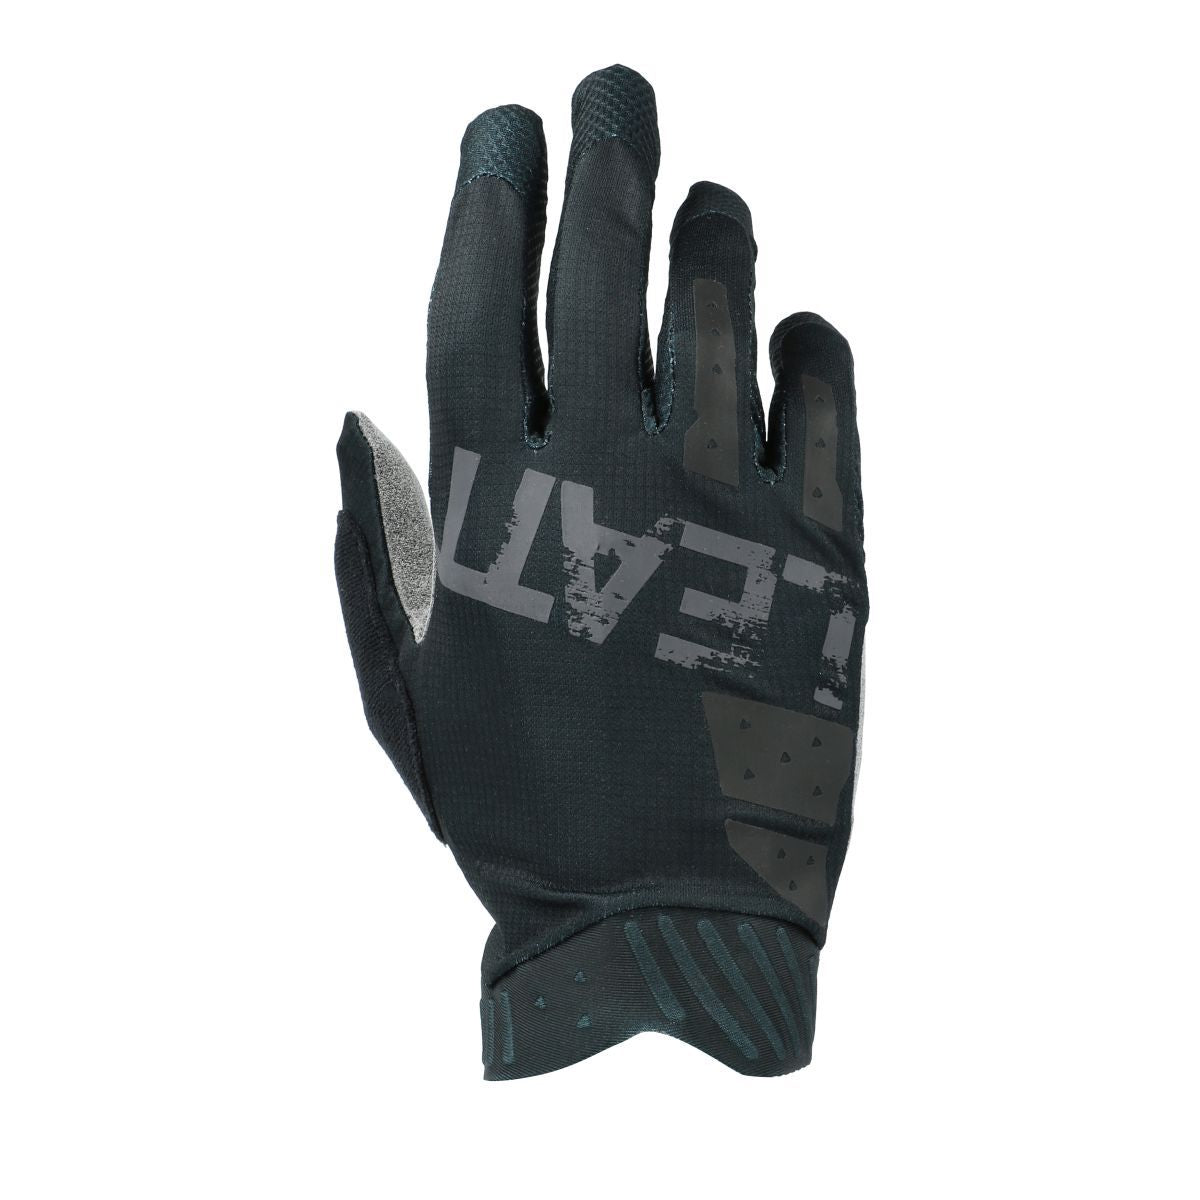 Leatt Protection Glove Mtb 1.0 Gripr Black S in Black